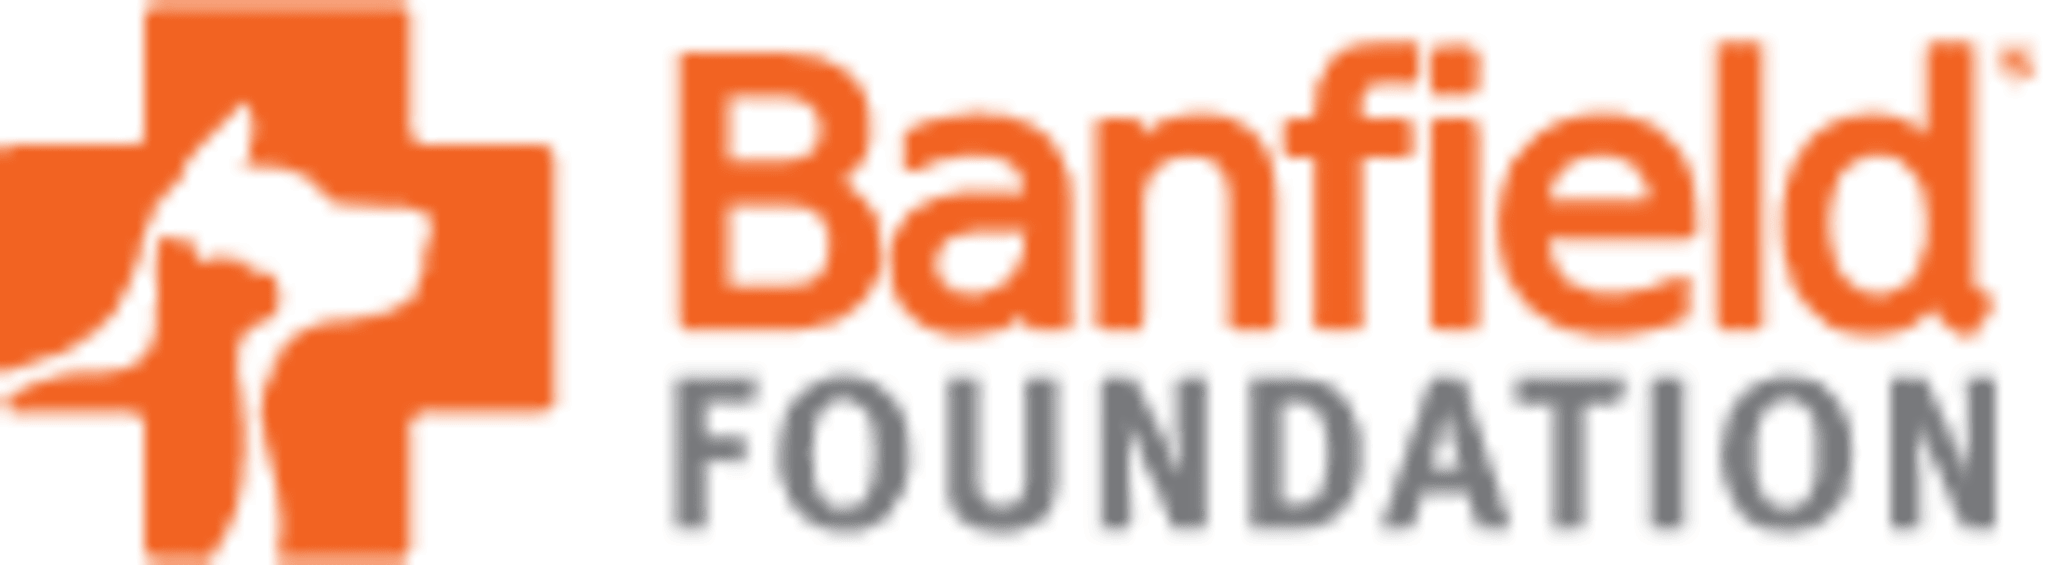 Banfield Foundation Logo